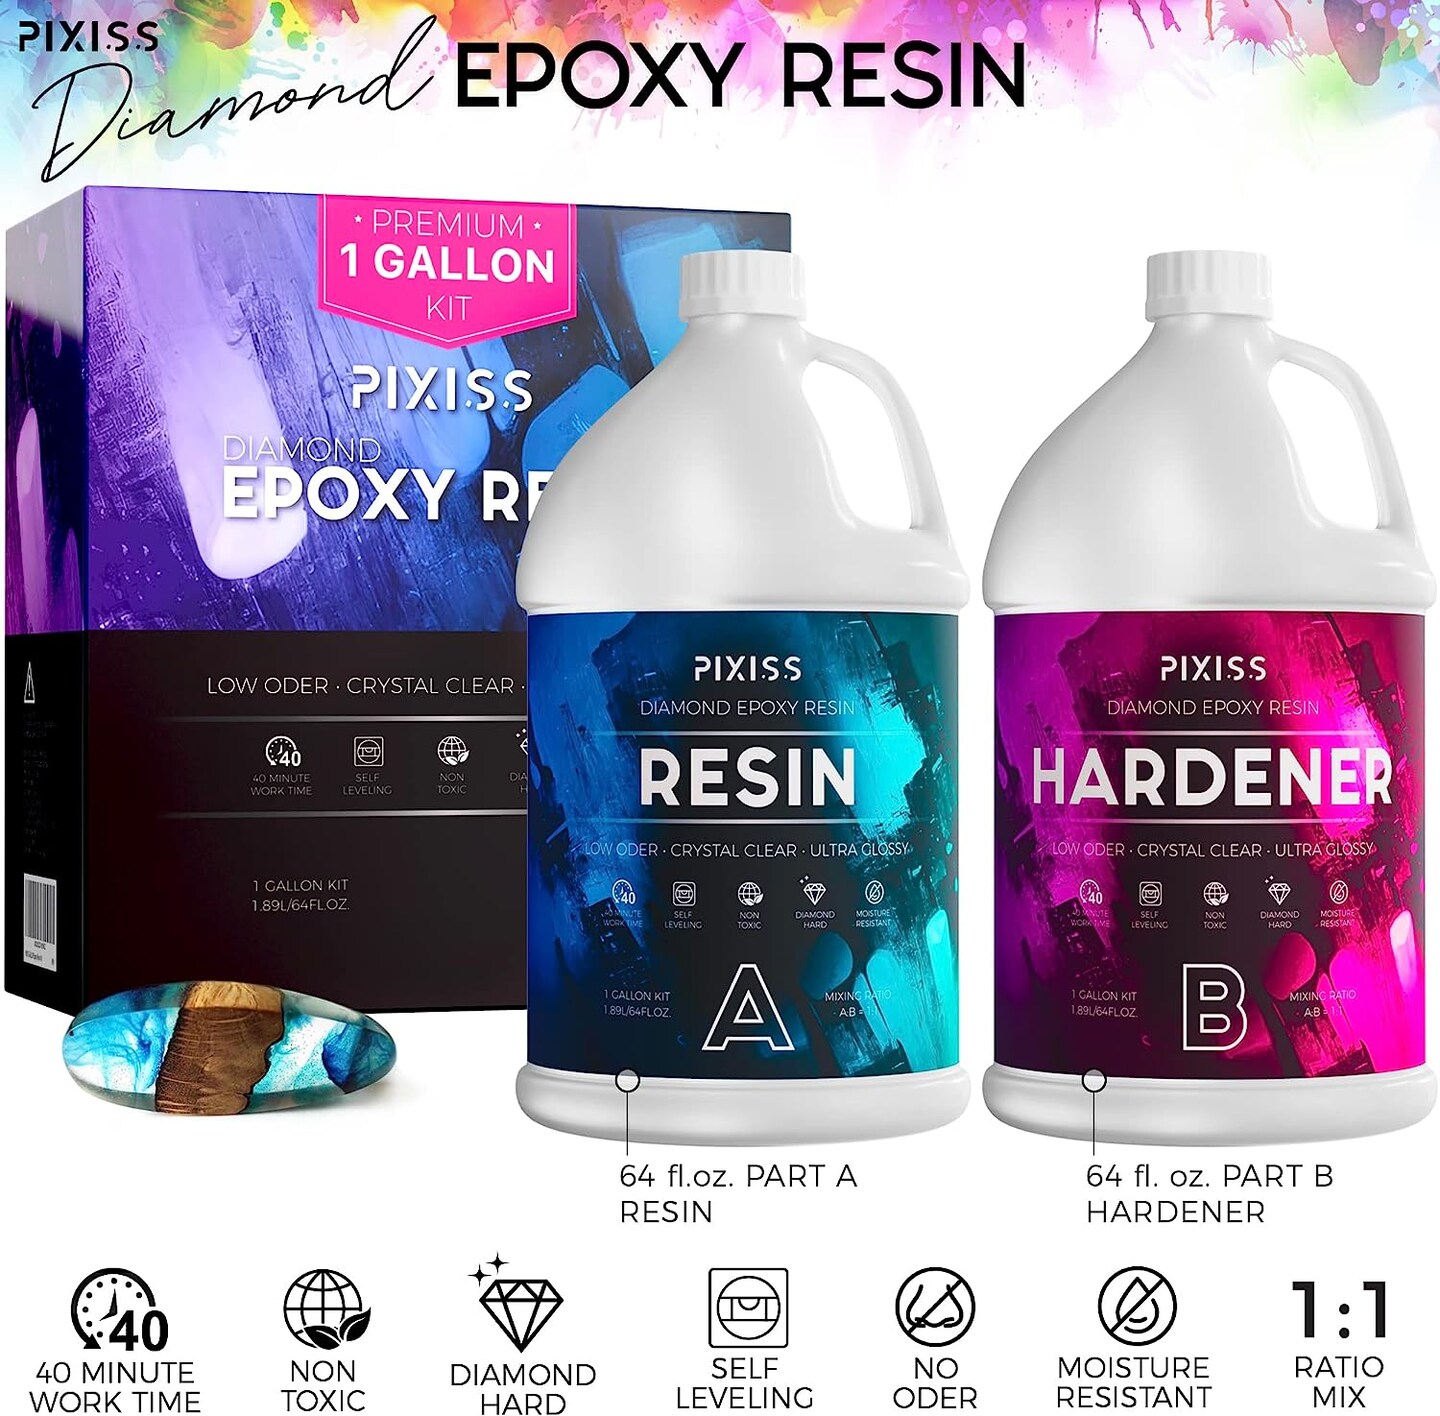 Crystal Clear Epoxy Resin